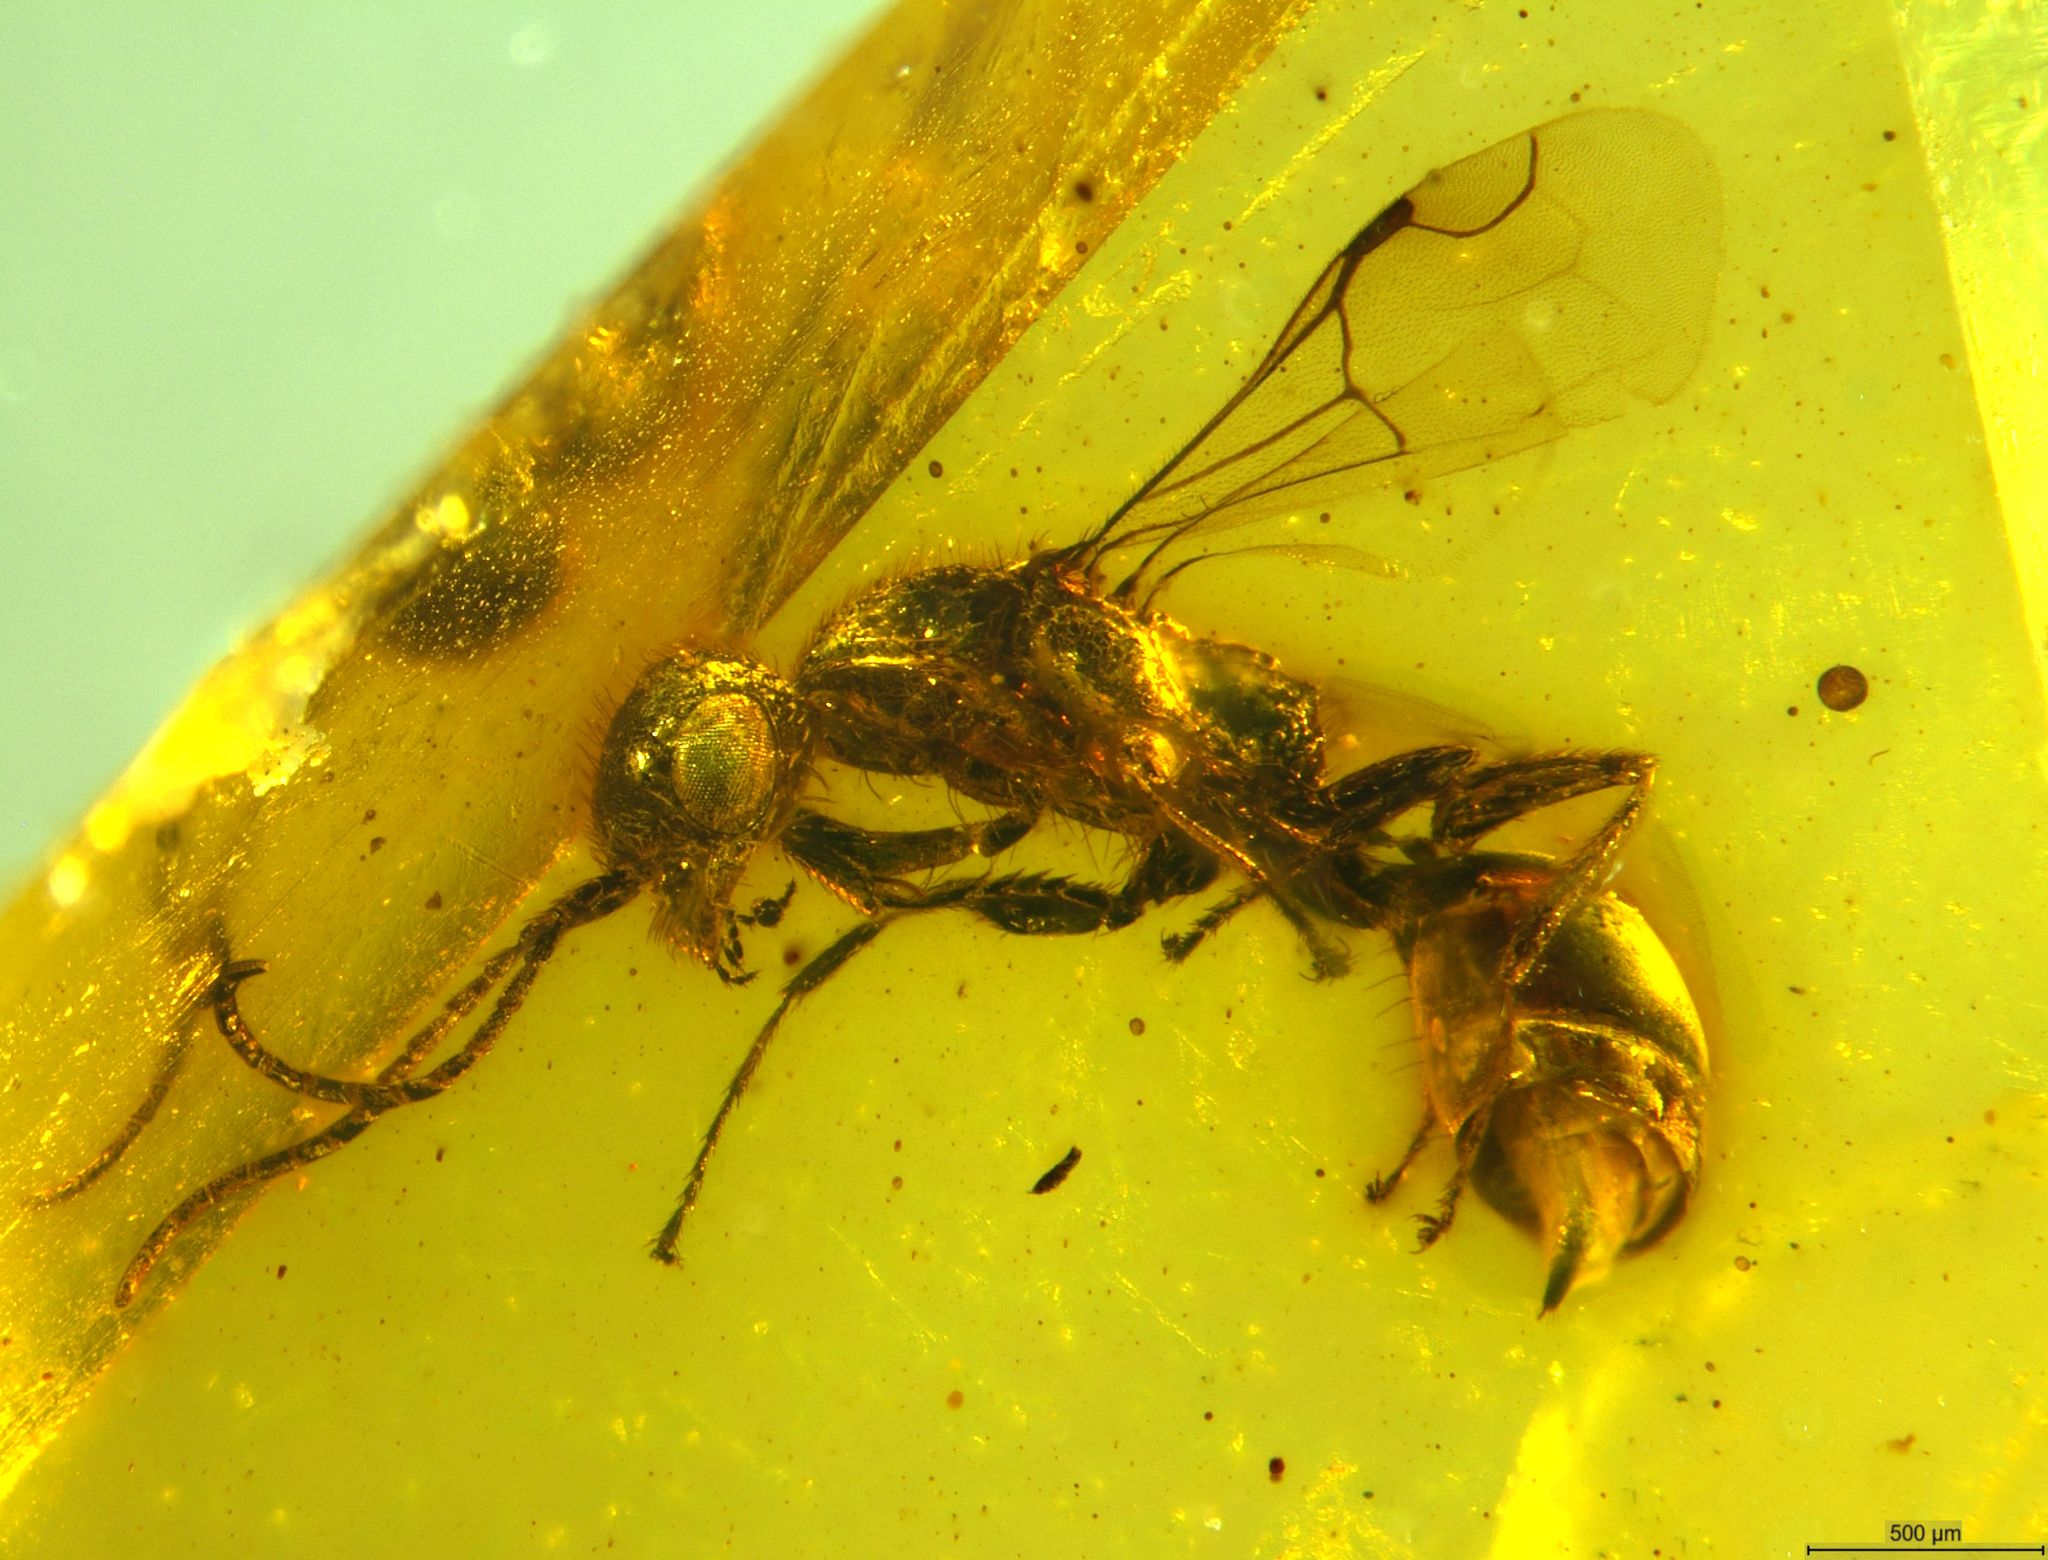 Insektenforscher entdecken längst ausgestorbene Wespe